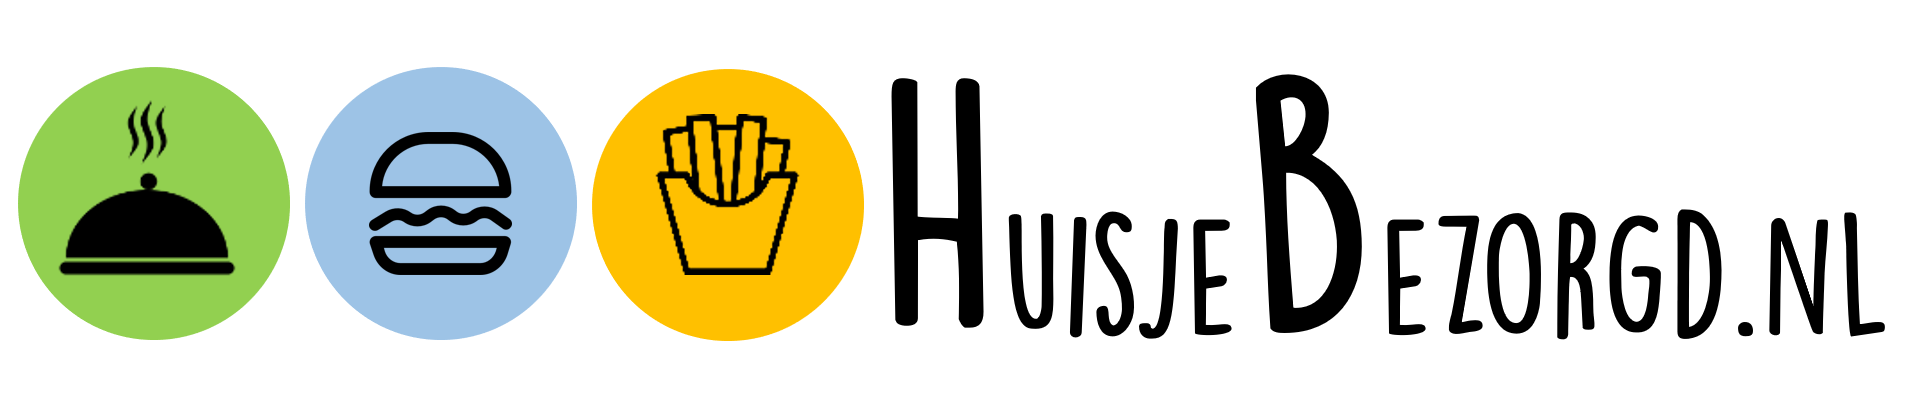 Logo verkleind Huisjebezorgd.nl